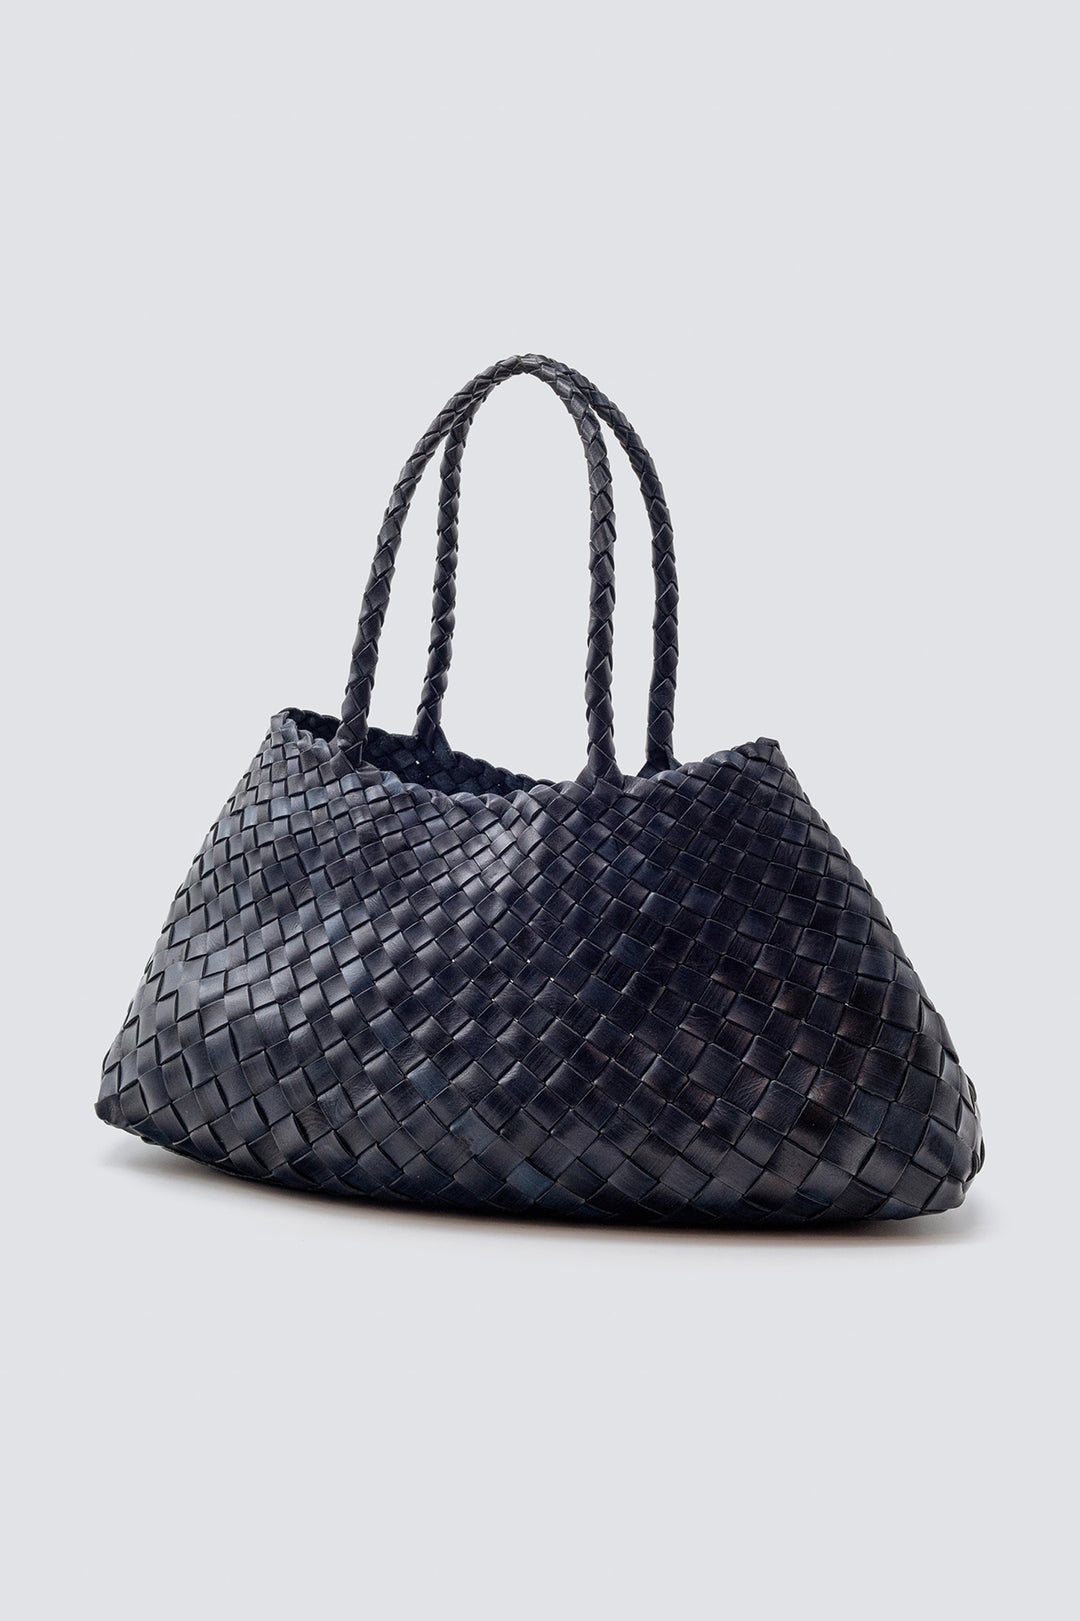 Dragon Diffusion woven leather bag handmade - Santa Croce Big Marine